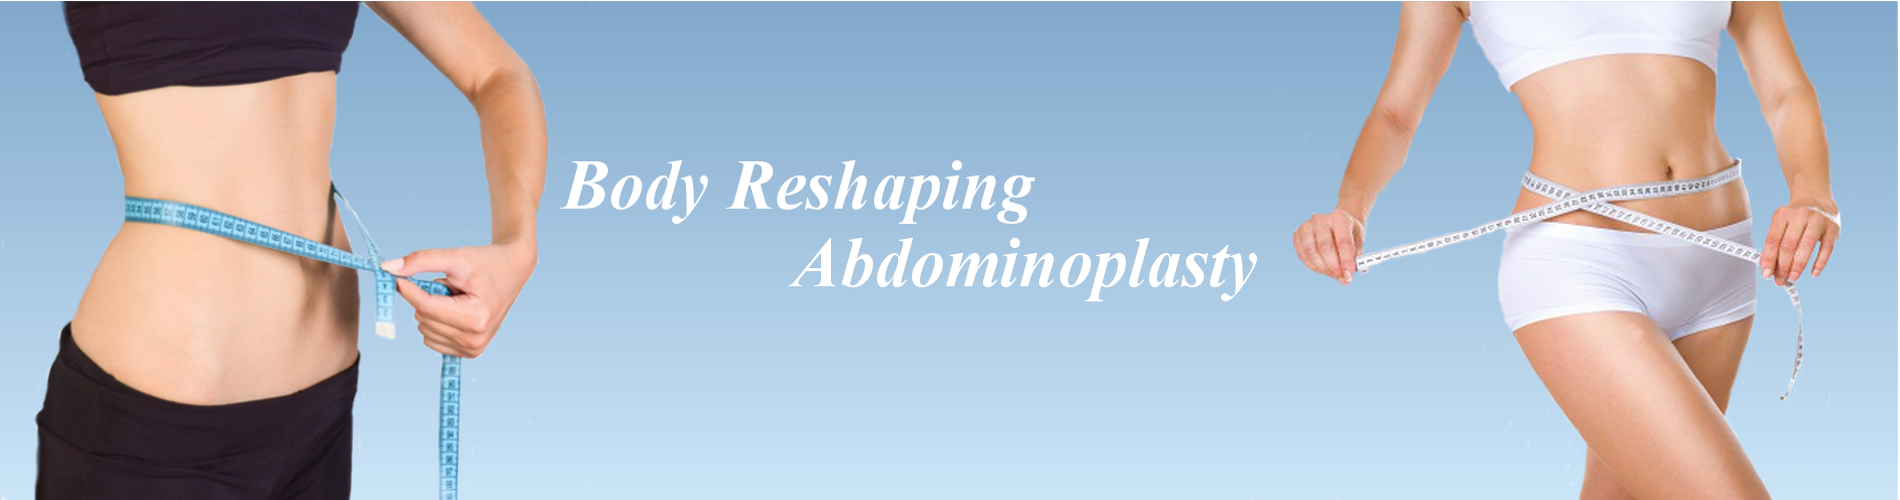 Body reshaping abdominoplasty